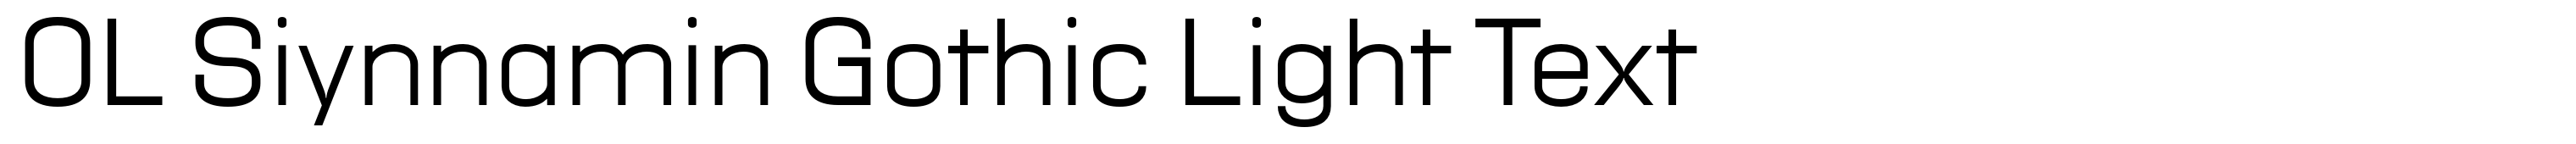 OL Siynnamin Gothic Light Text